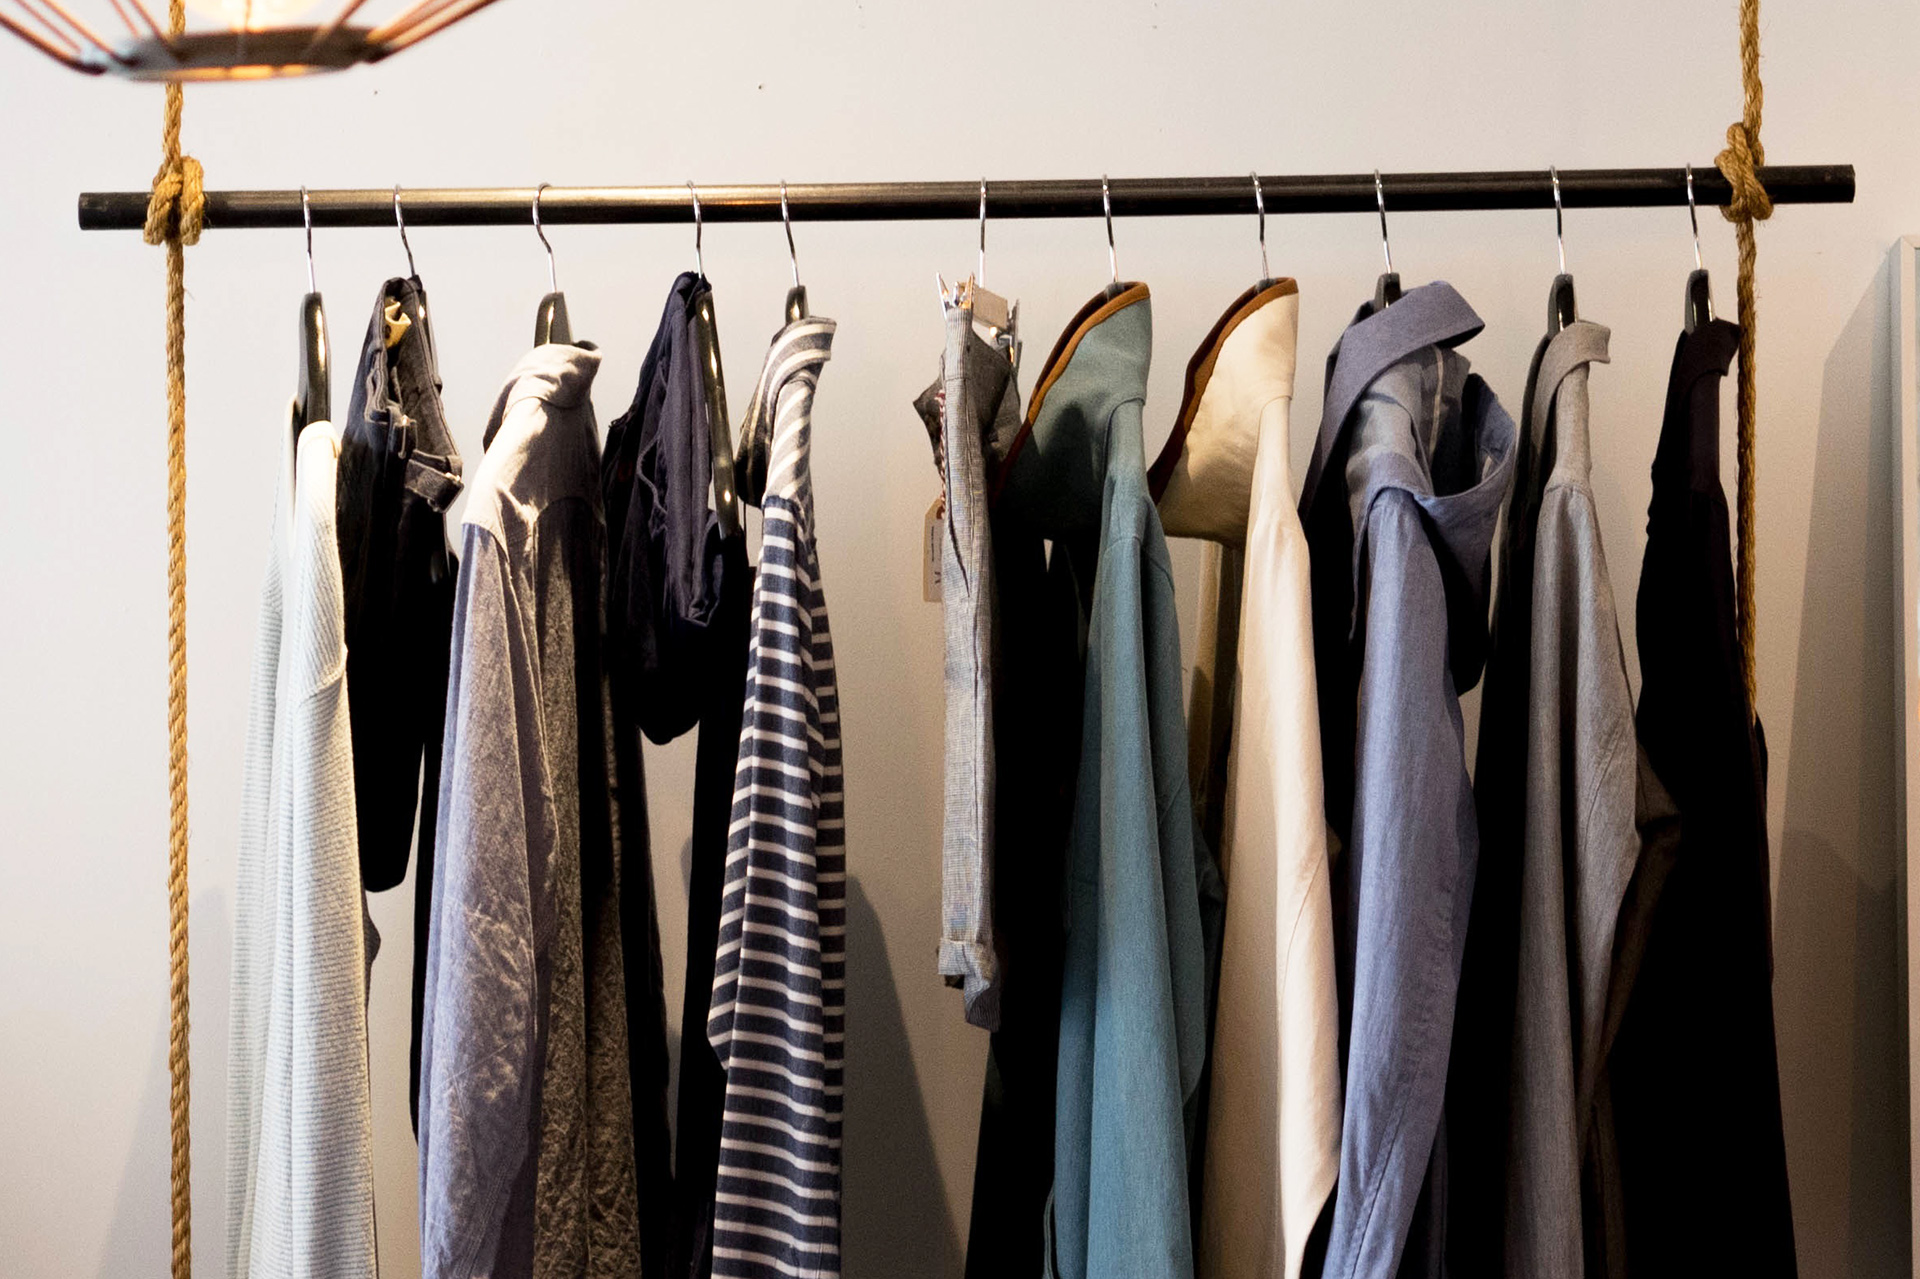 https://www.lifestorage.com/blog/wp-content/uploads/2015/11/no-closet-clothes-storage-b.jpg